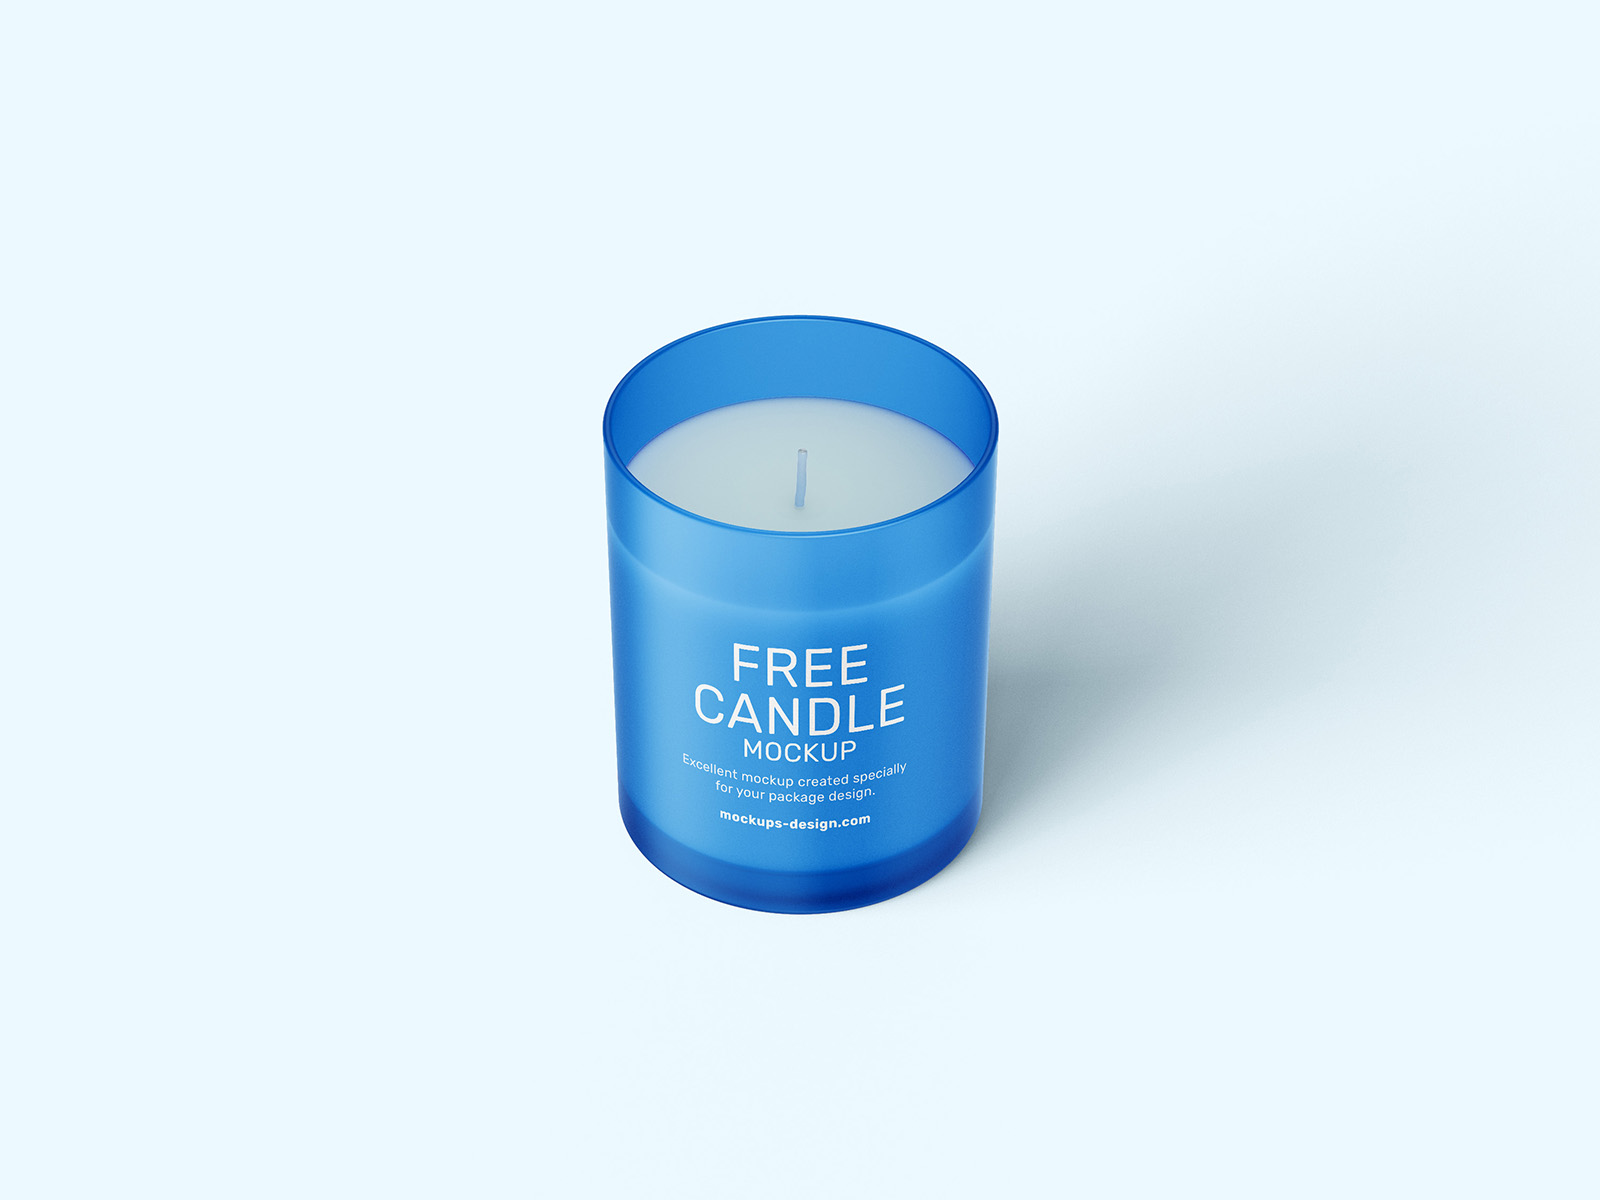 Free candle mockup